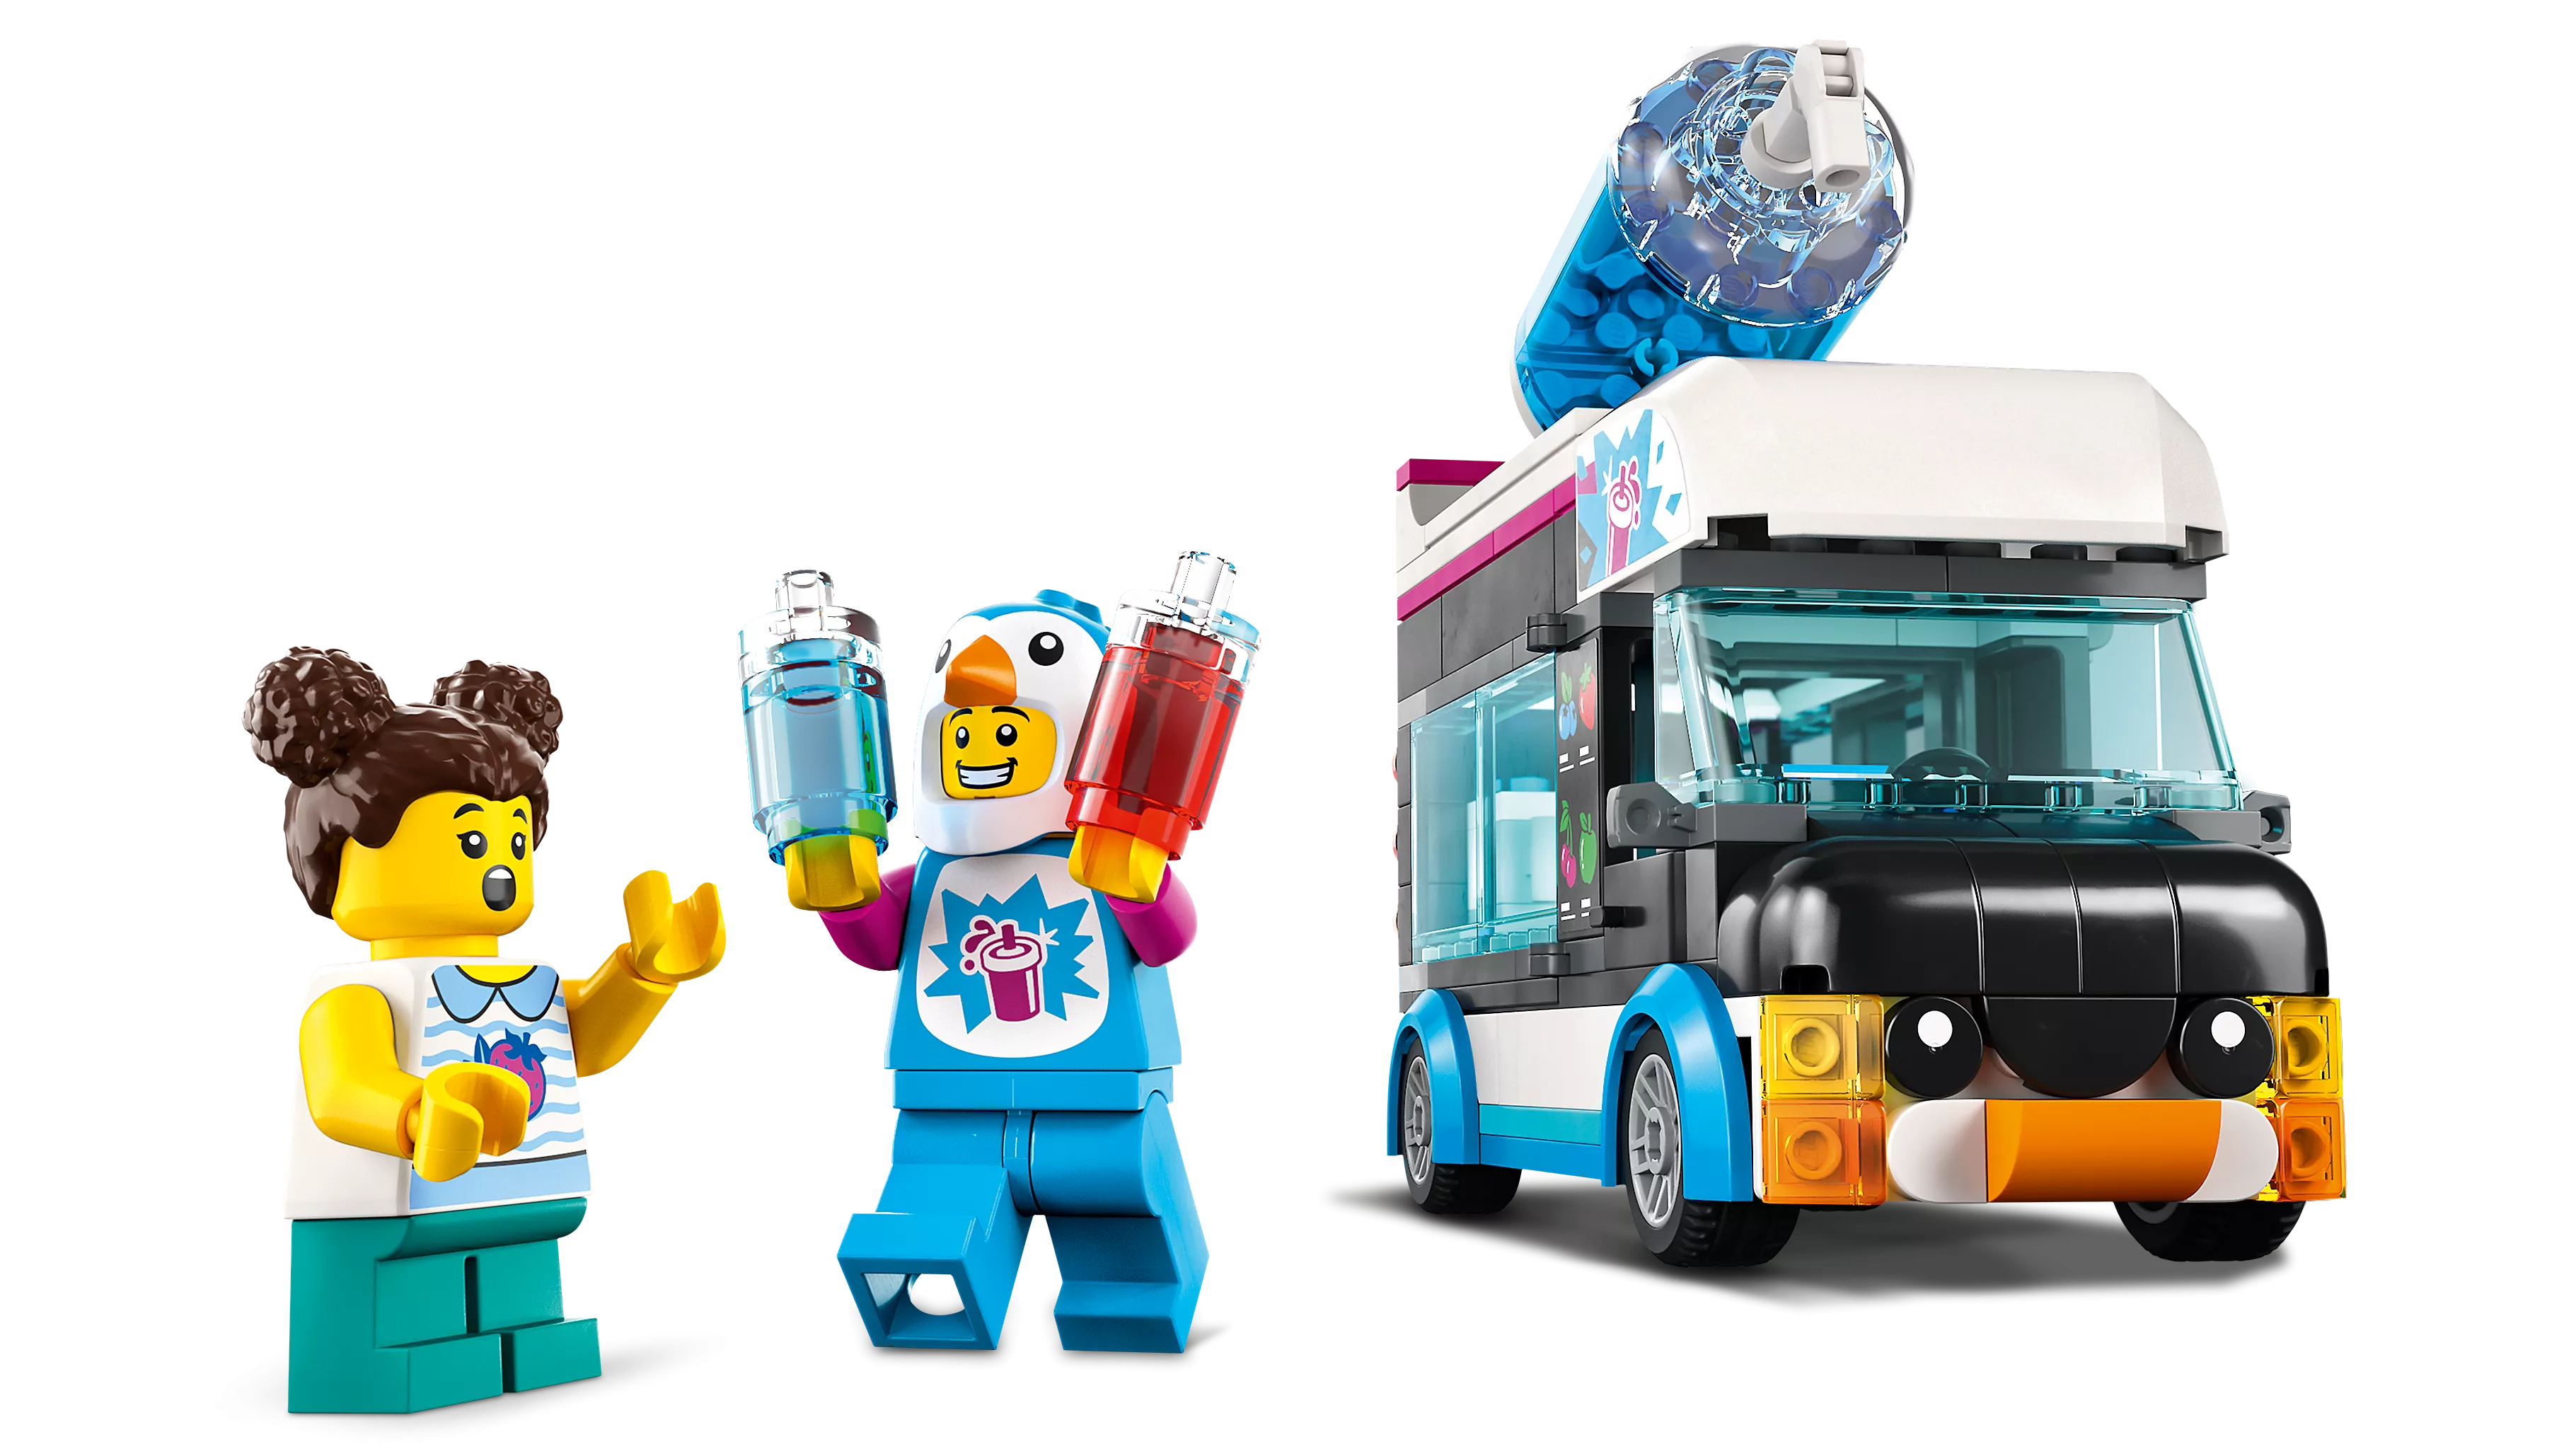 LEGO 60384 Slush-Eiswagen